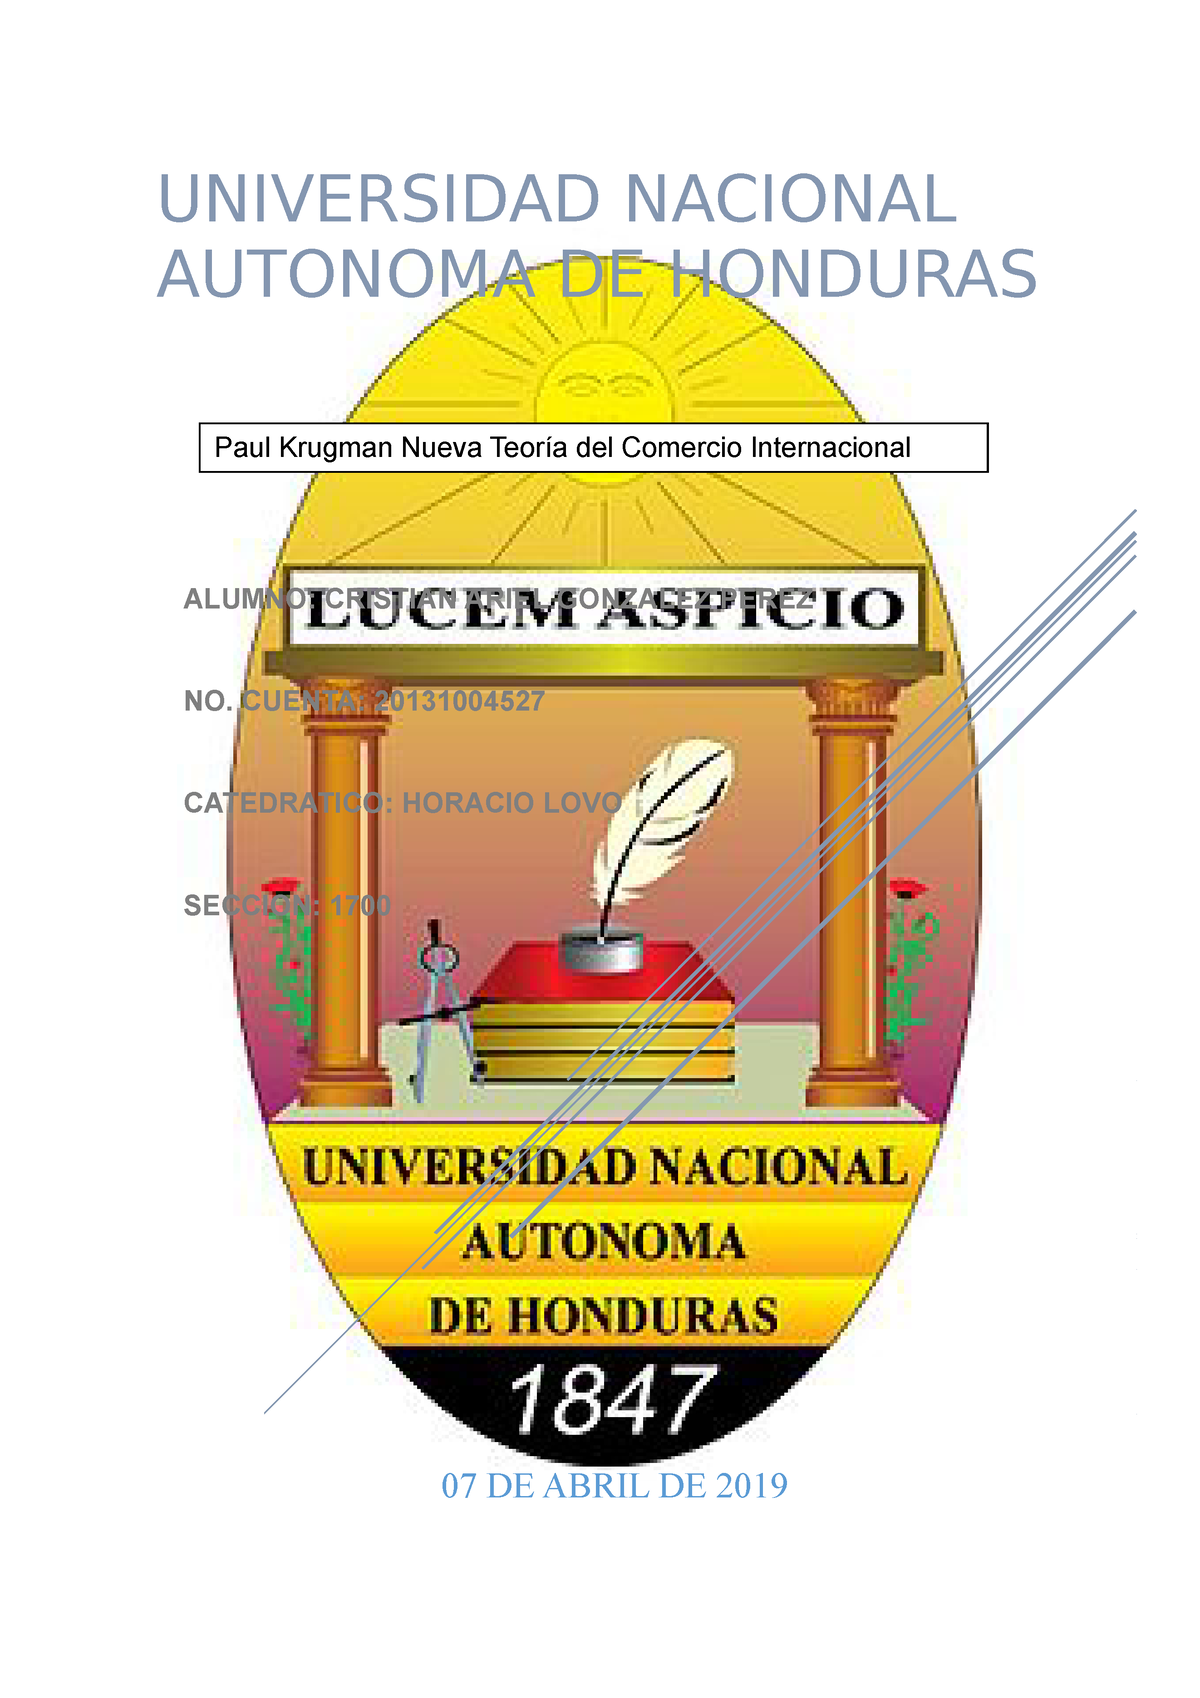 Paul Krugman Nueva Teoria del Comercio Internacional - UNIVERSIDAD NACIONAL  AUTONOMA DE HONDURAS - Studocu